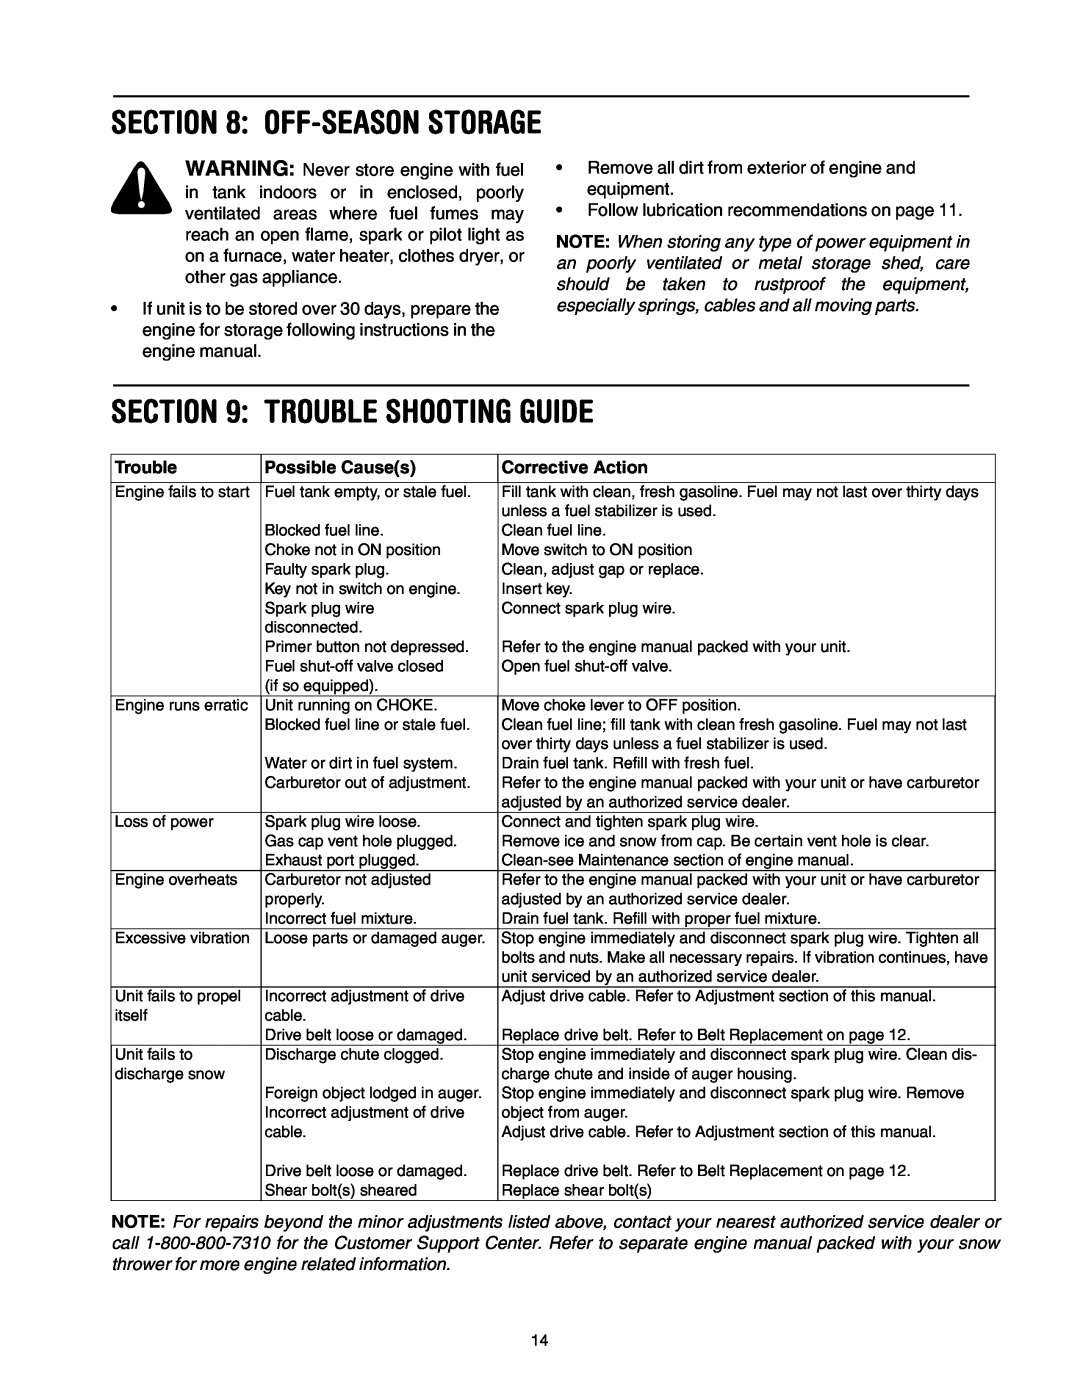 MTD 640 manual Trouble Shooting Guide, Off-Season Storage 